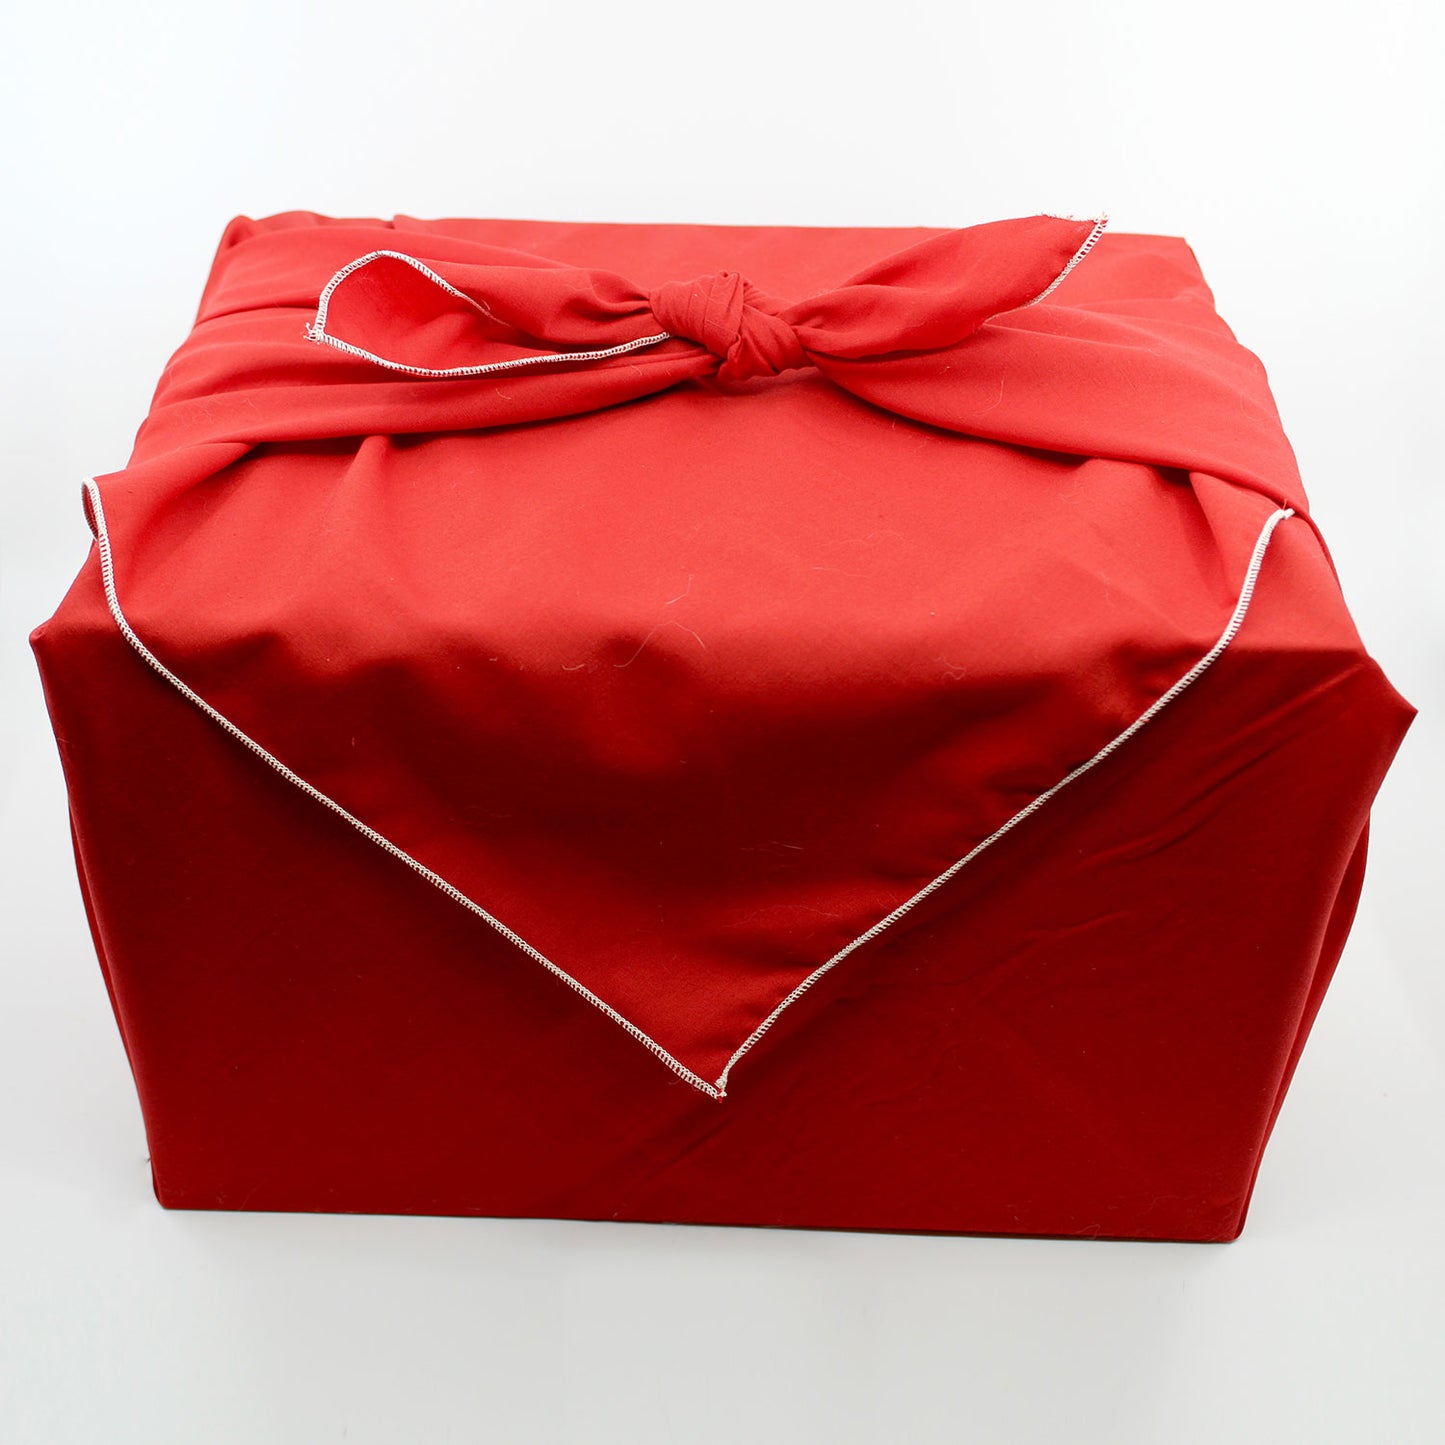 Emballage cadeau réutilisable (furoshiki)